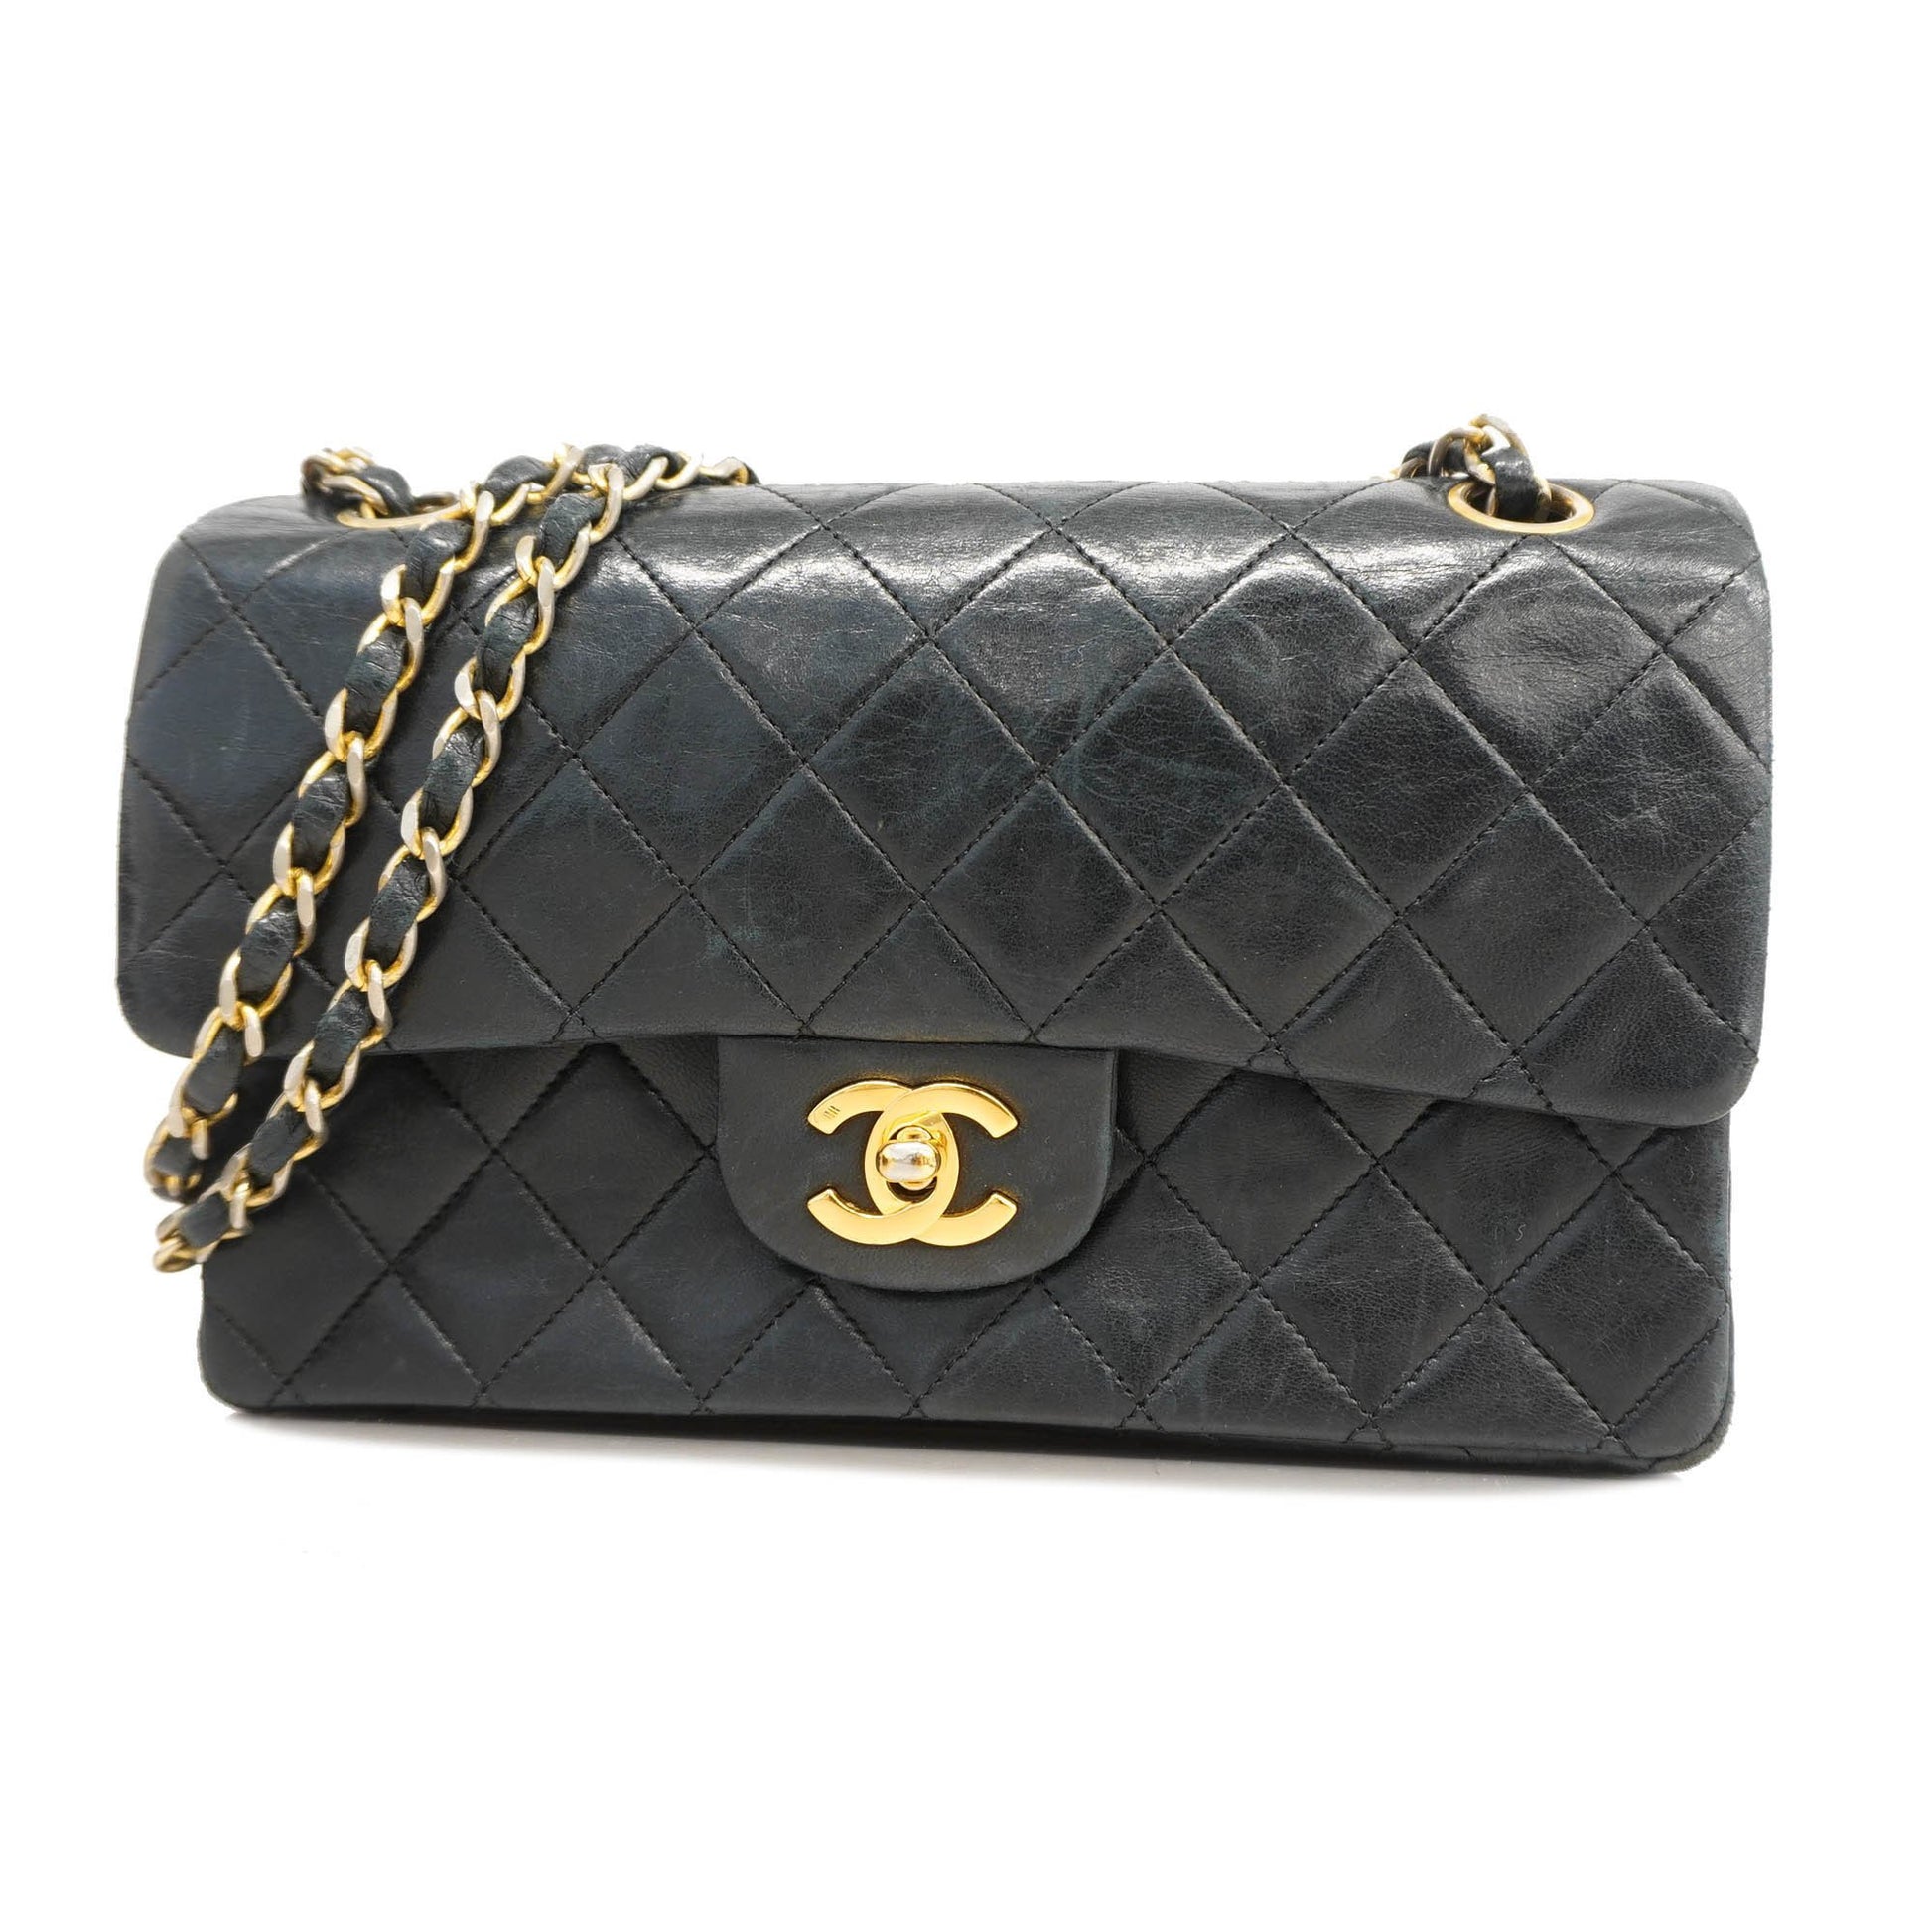 Chanel Shoulder Bag Matelasse W Flap W Chain Lambskin Black Gold metal